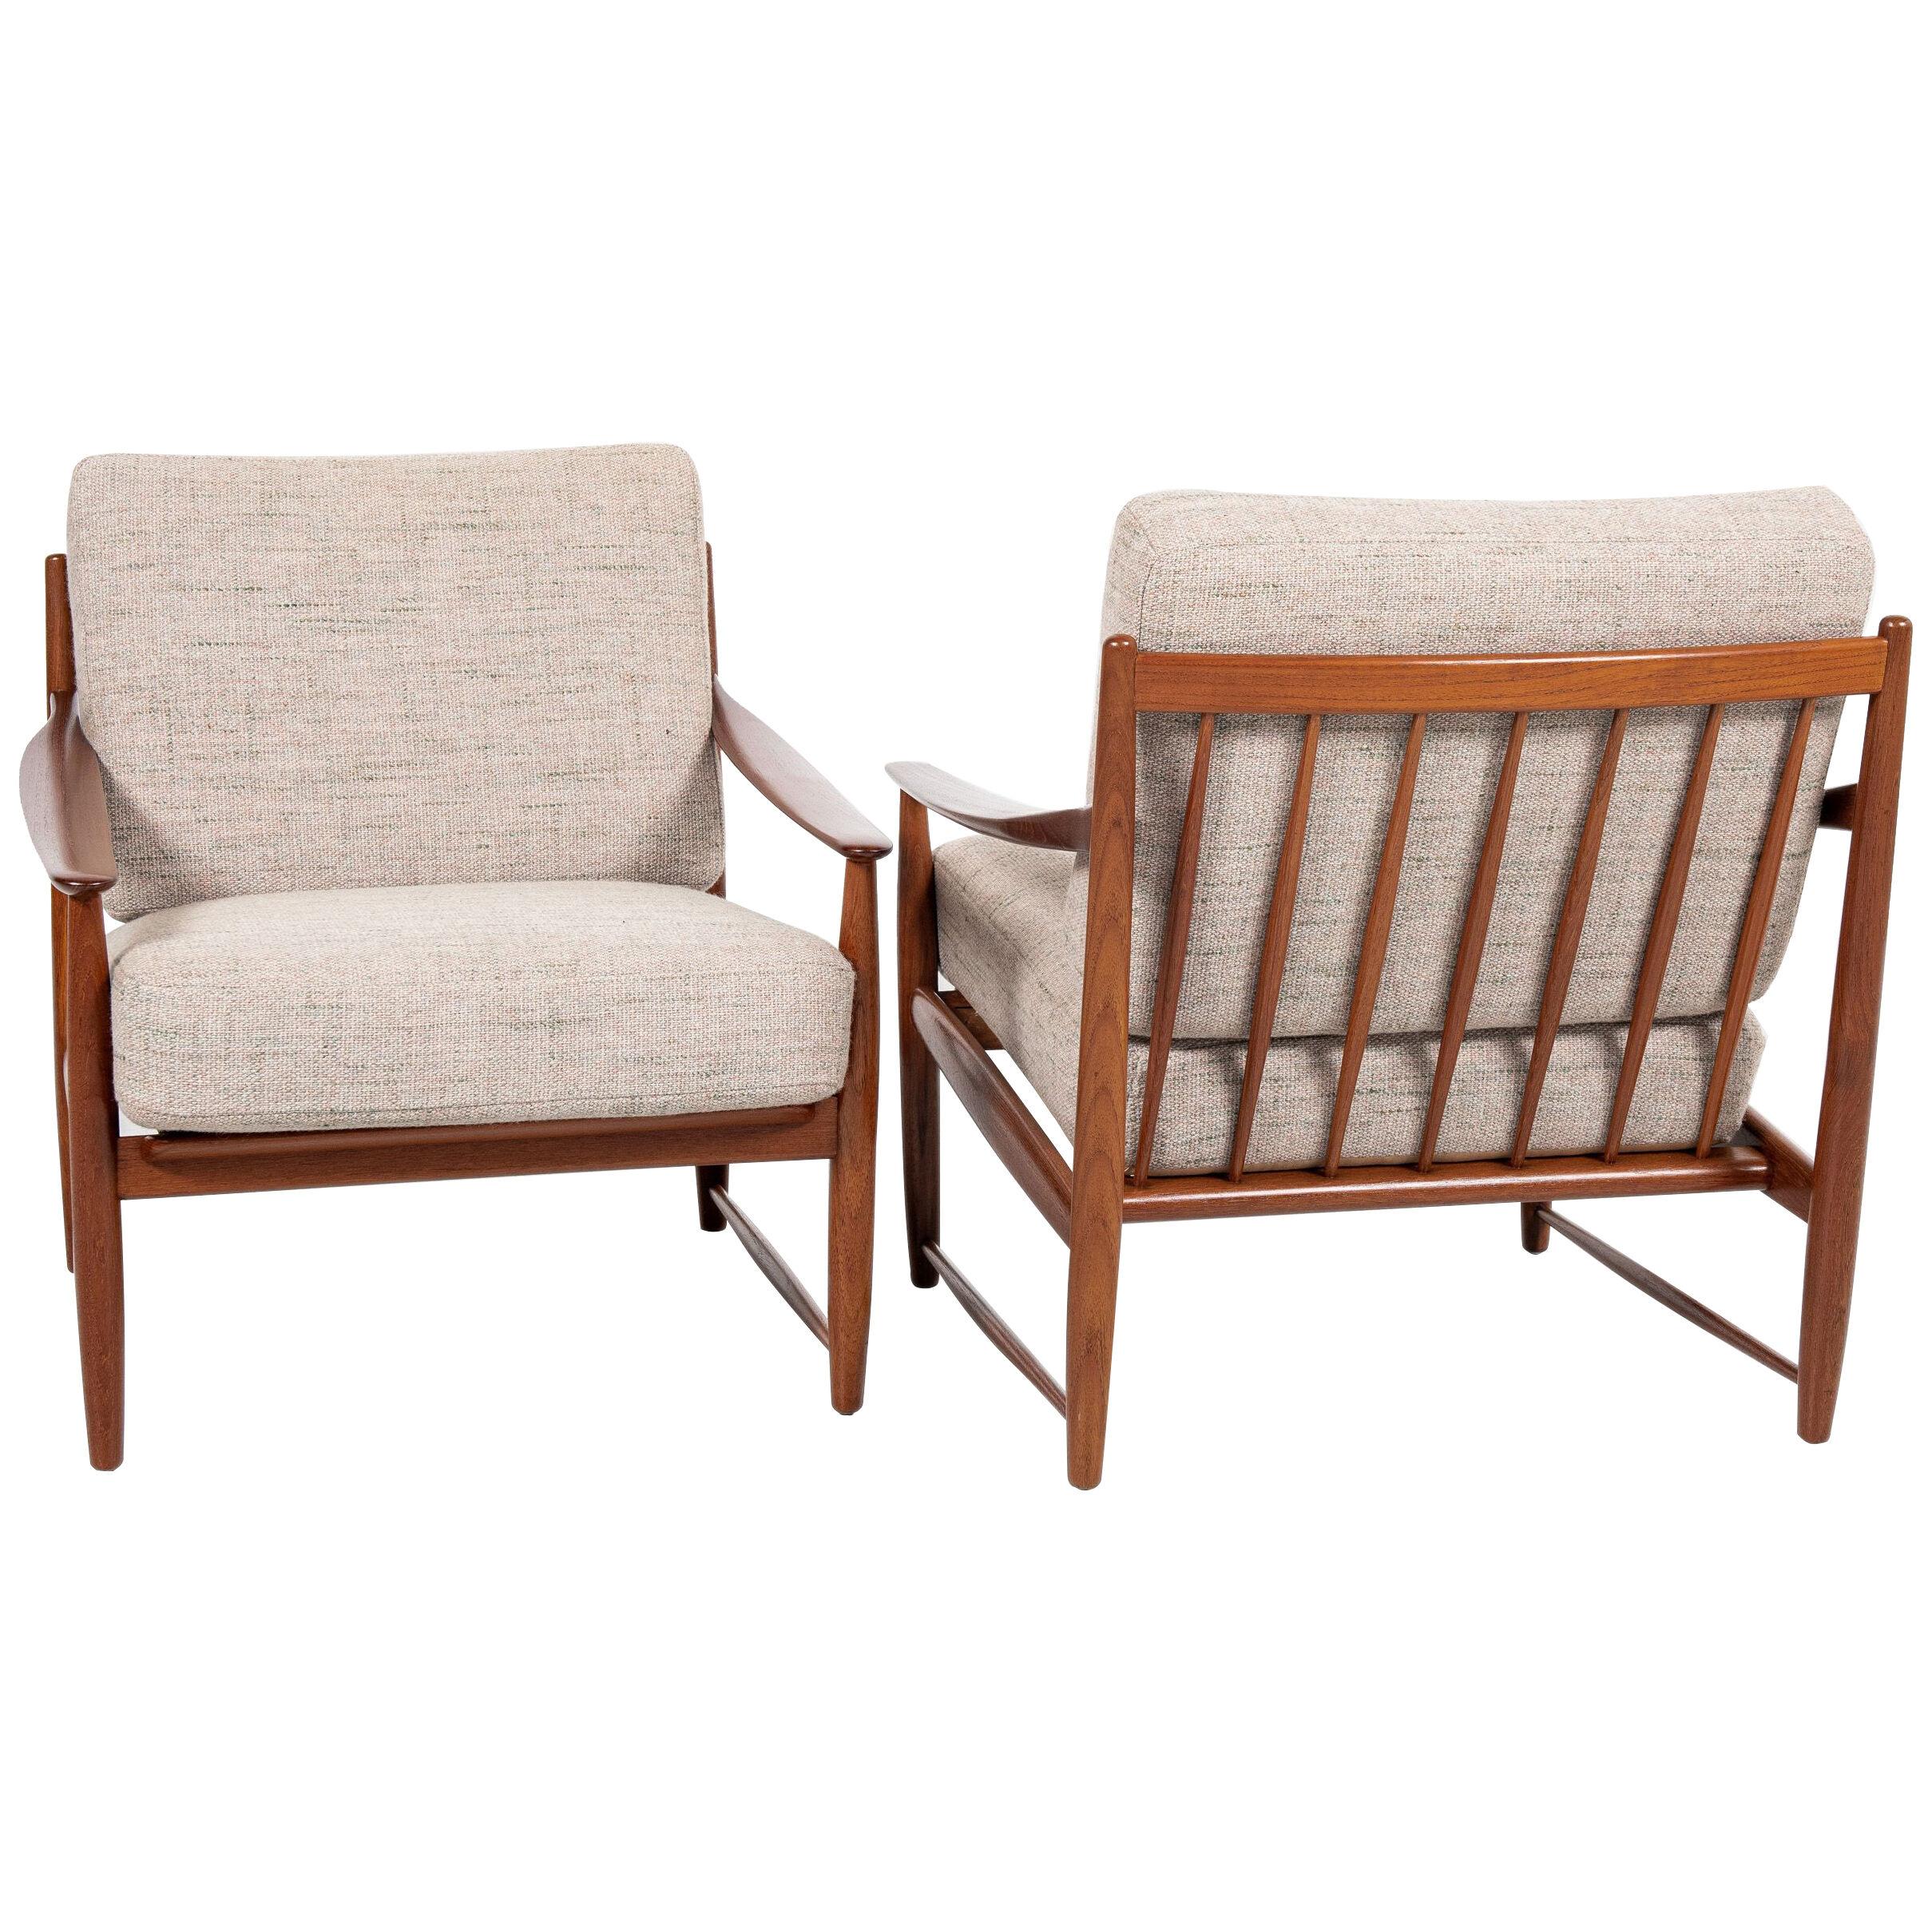 Midcentury Danish pair of easy chairs in teak 1960s - legs connected